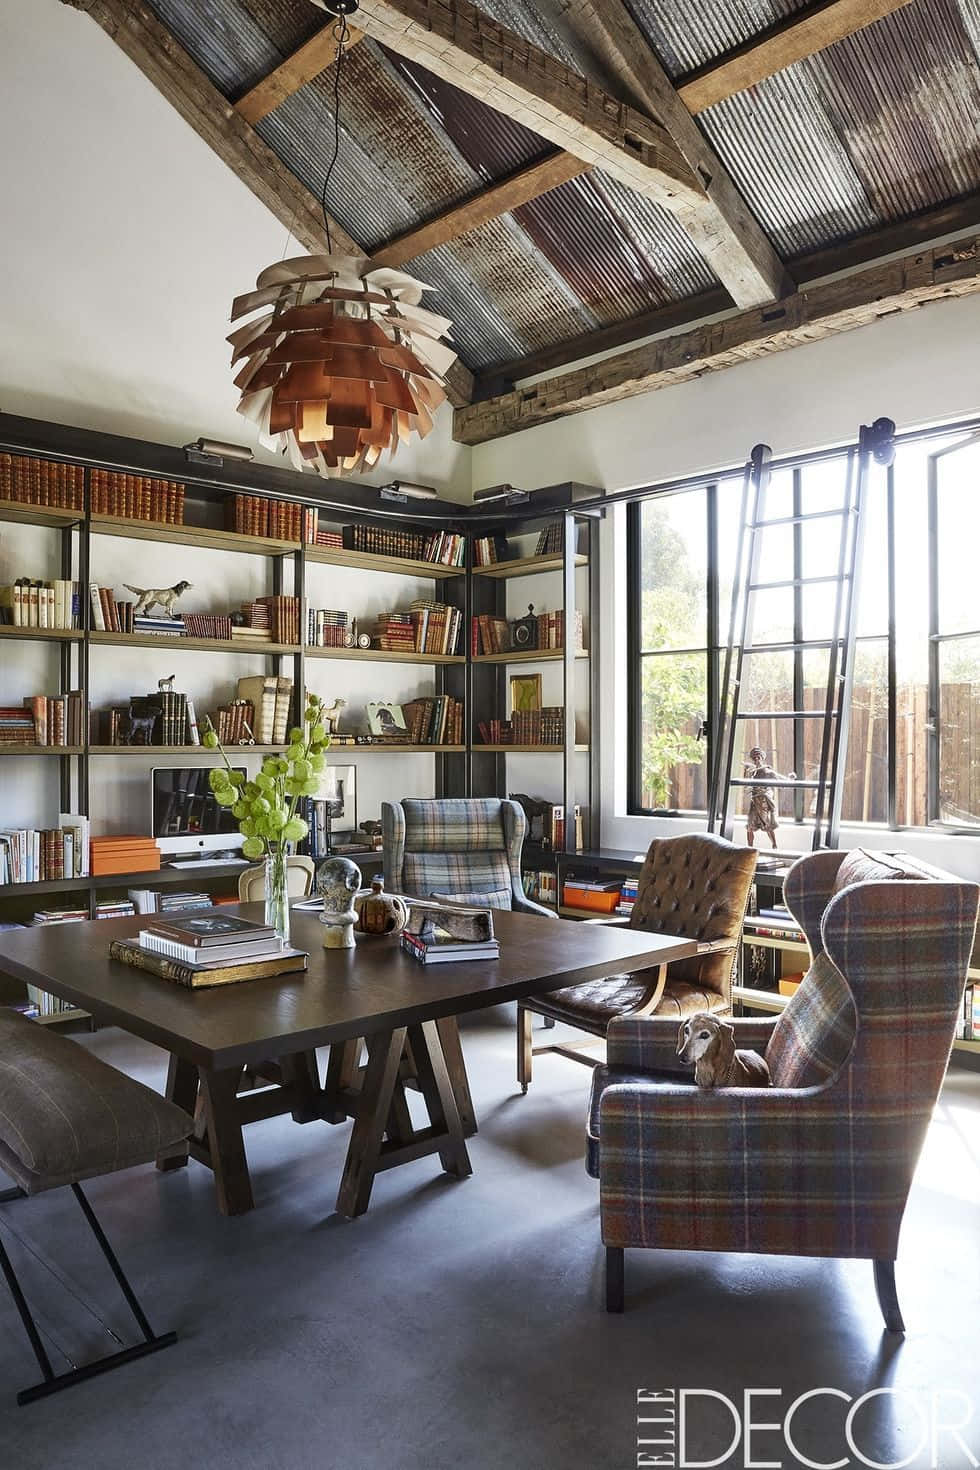 Image Modern Home Interior With Cozy Interiors And Elegant Decor